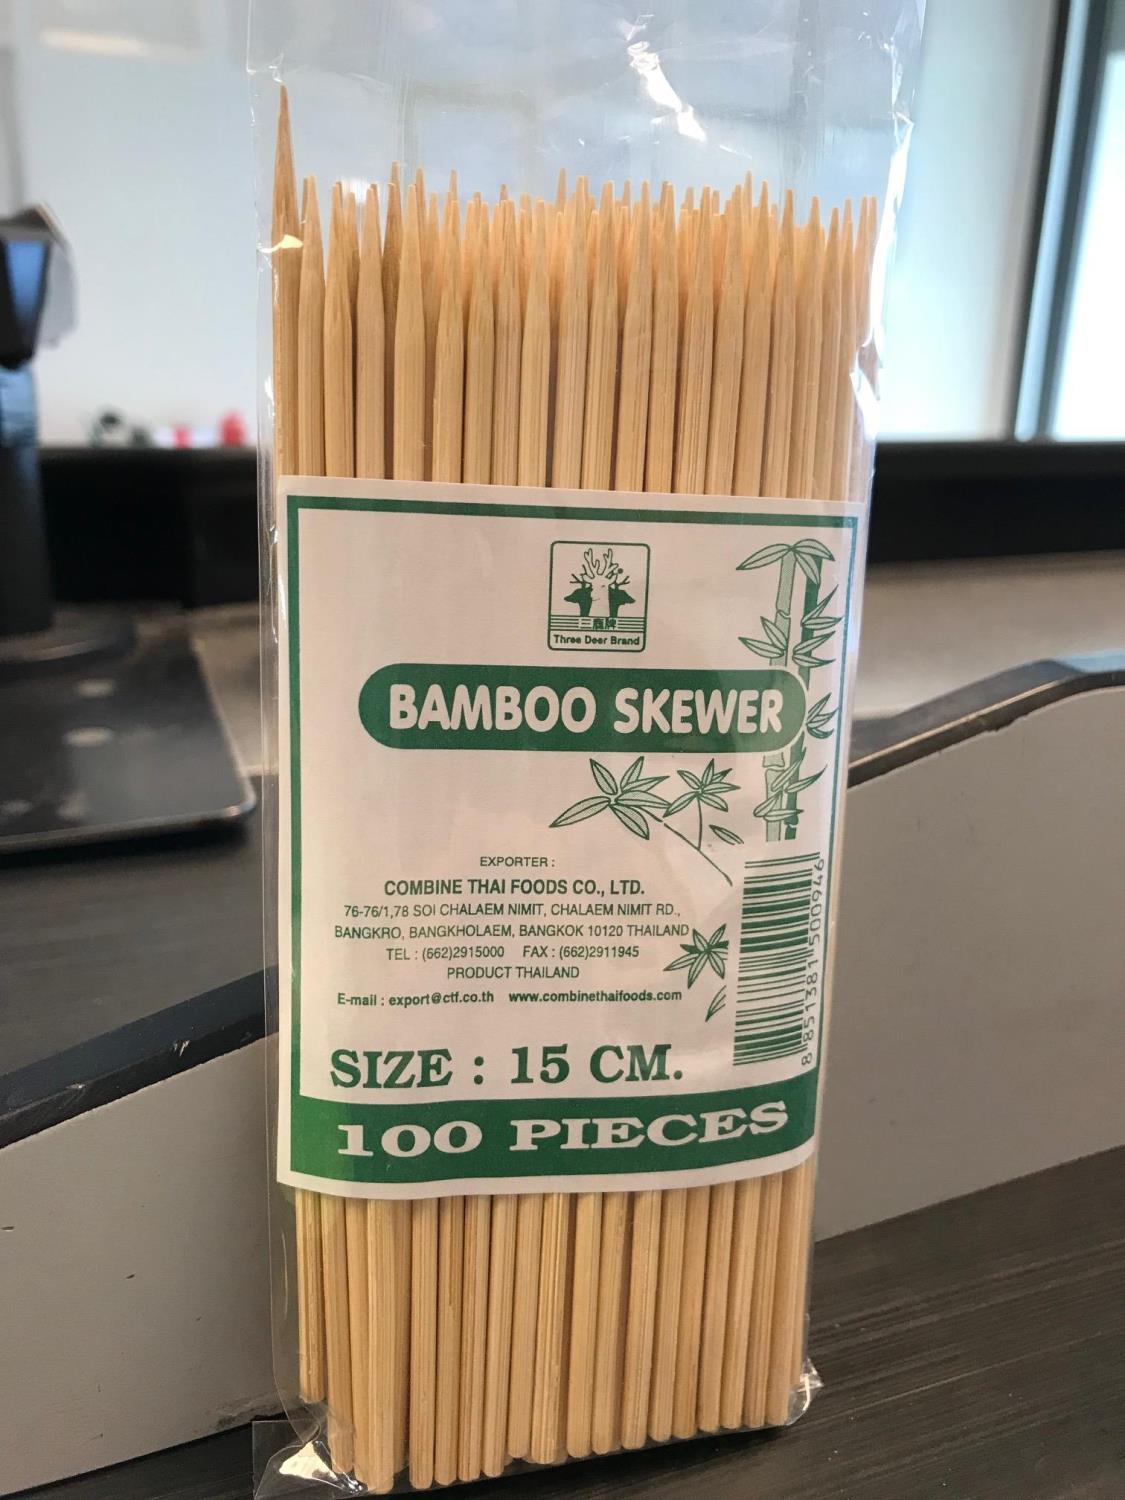 Bamboo Skewer 15 cm (100 pieces) 竹签15厘米(100根装)